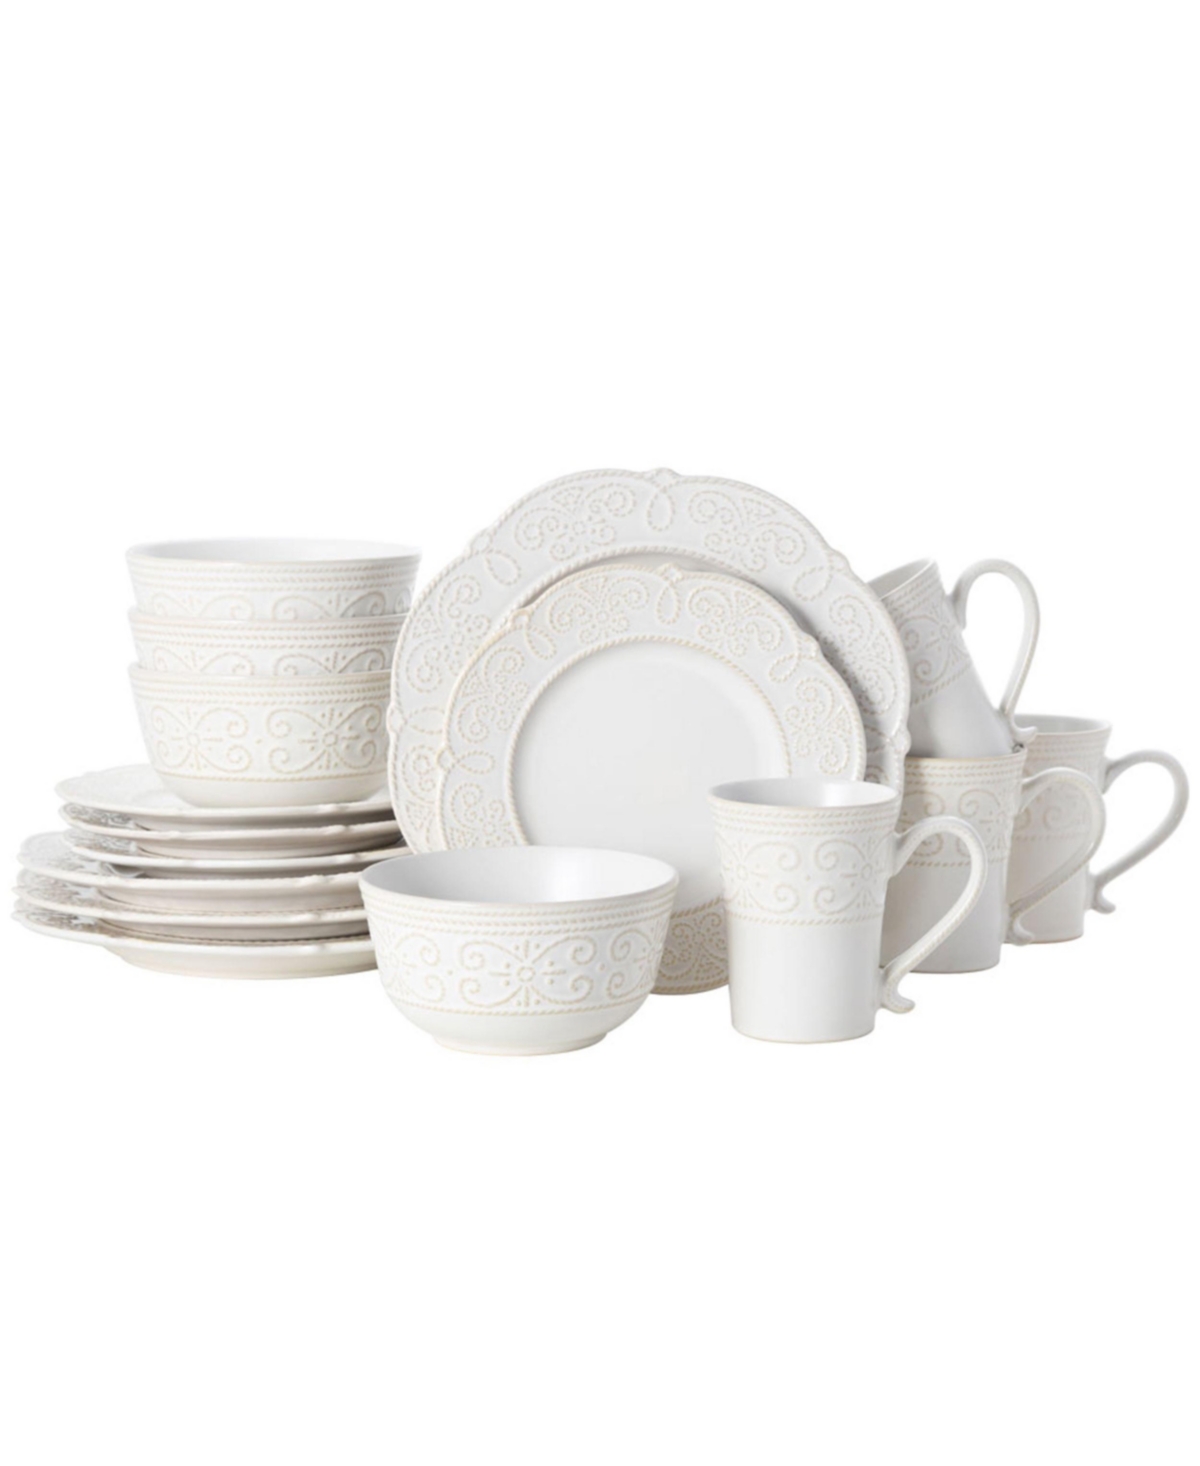 abby white 16 pc dinnerware set, service for 4 - White